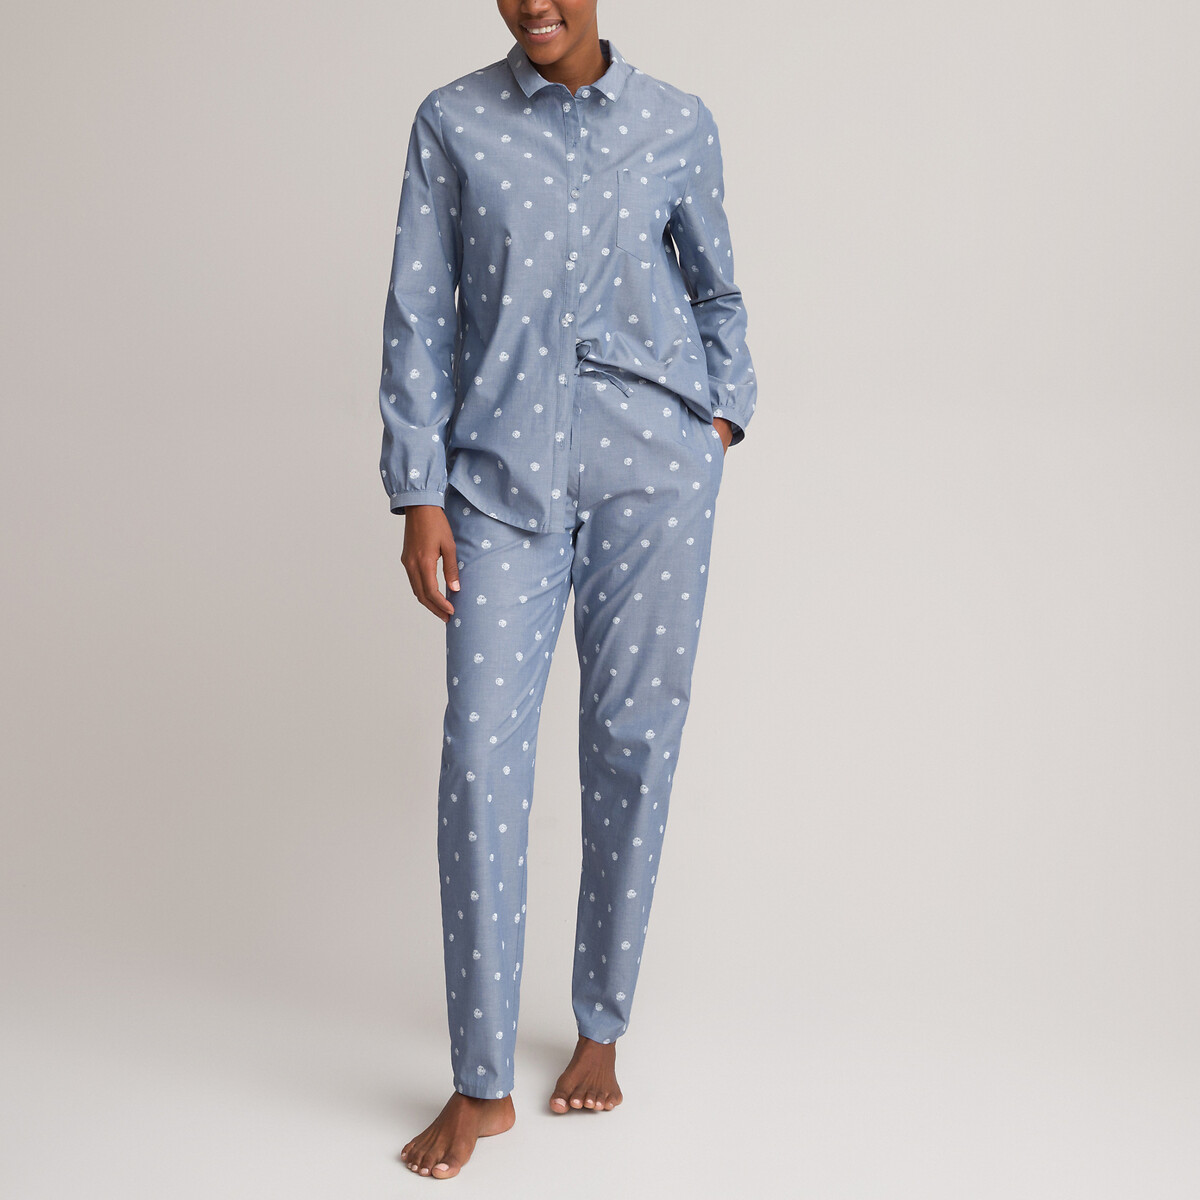 Femme En Coton Brossé Pyjamas Pjs Pyjamas Sleepwear Nightwear 